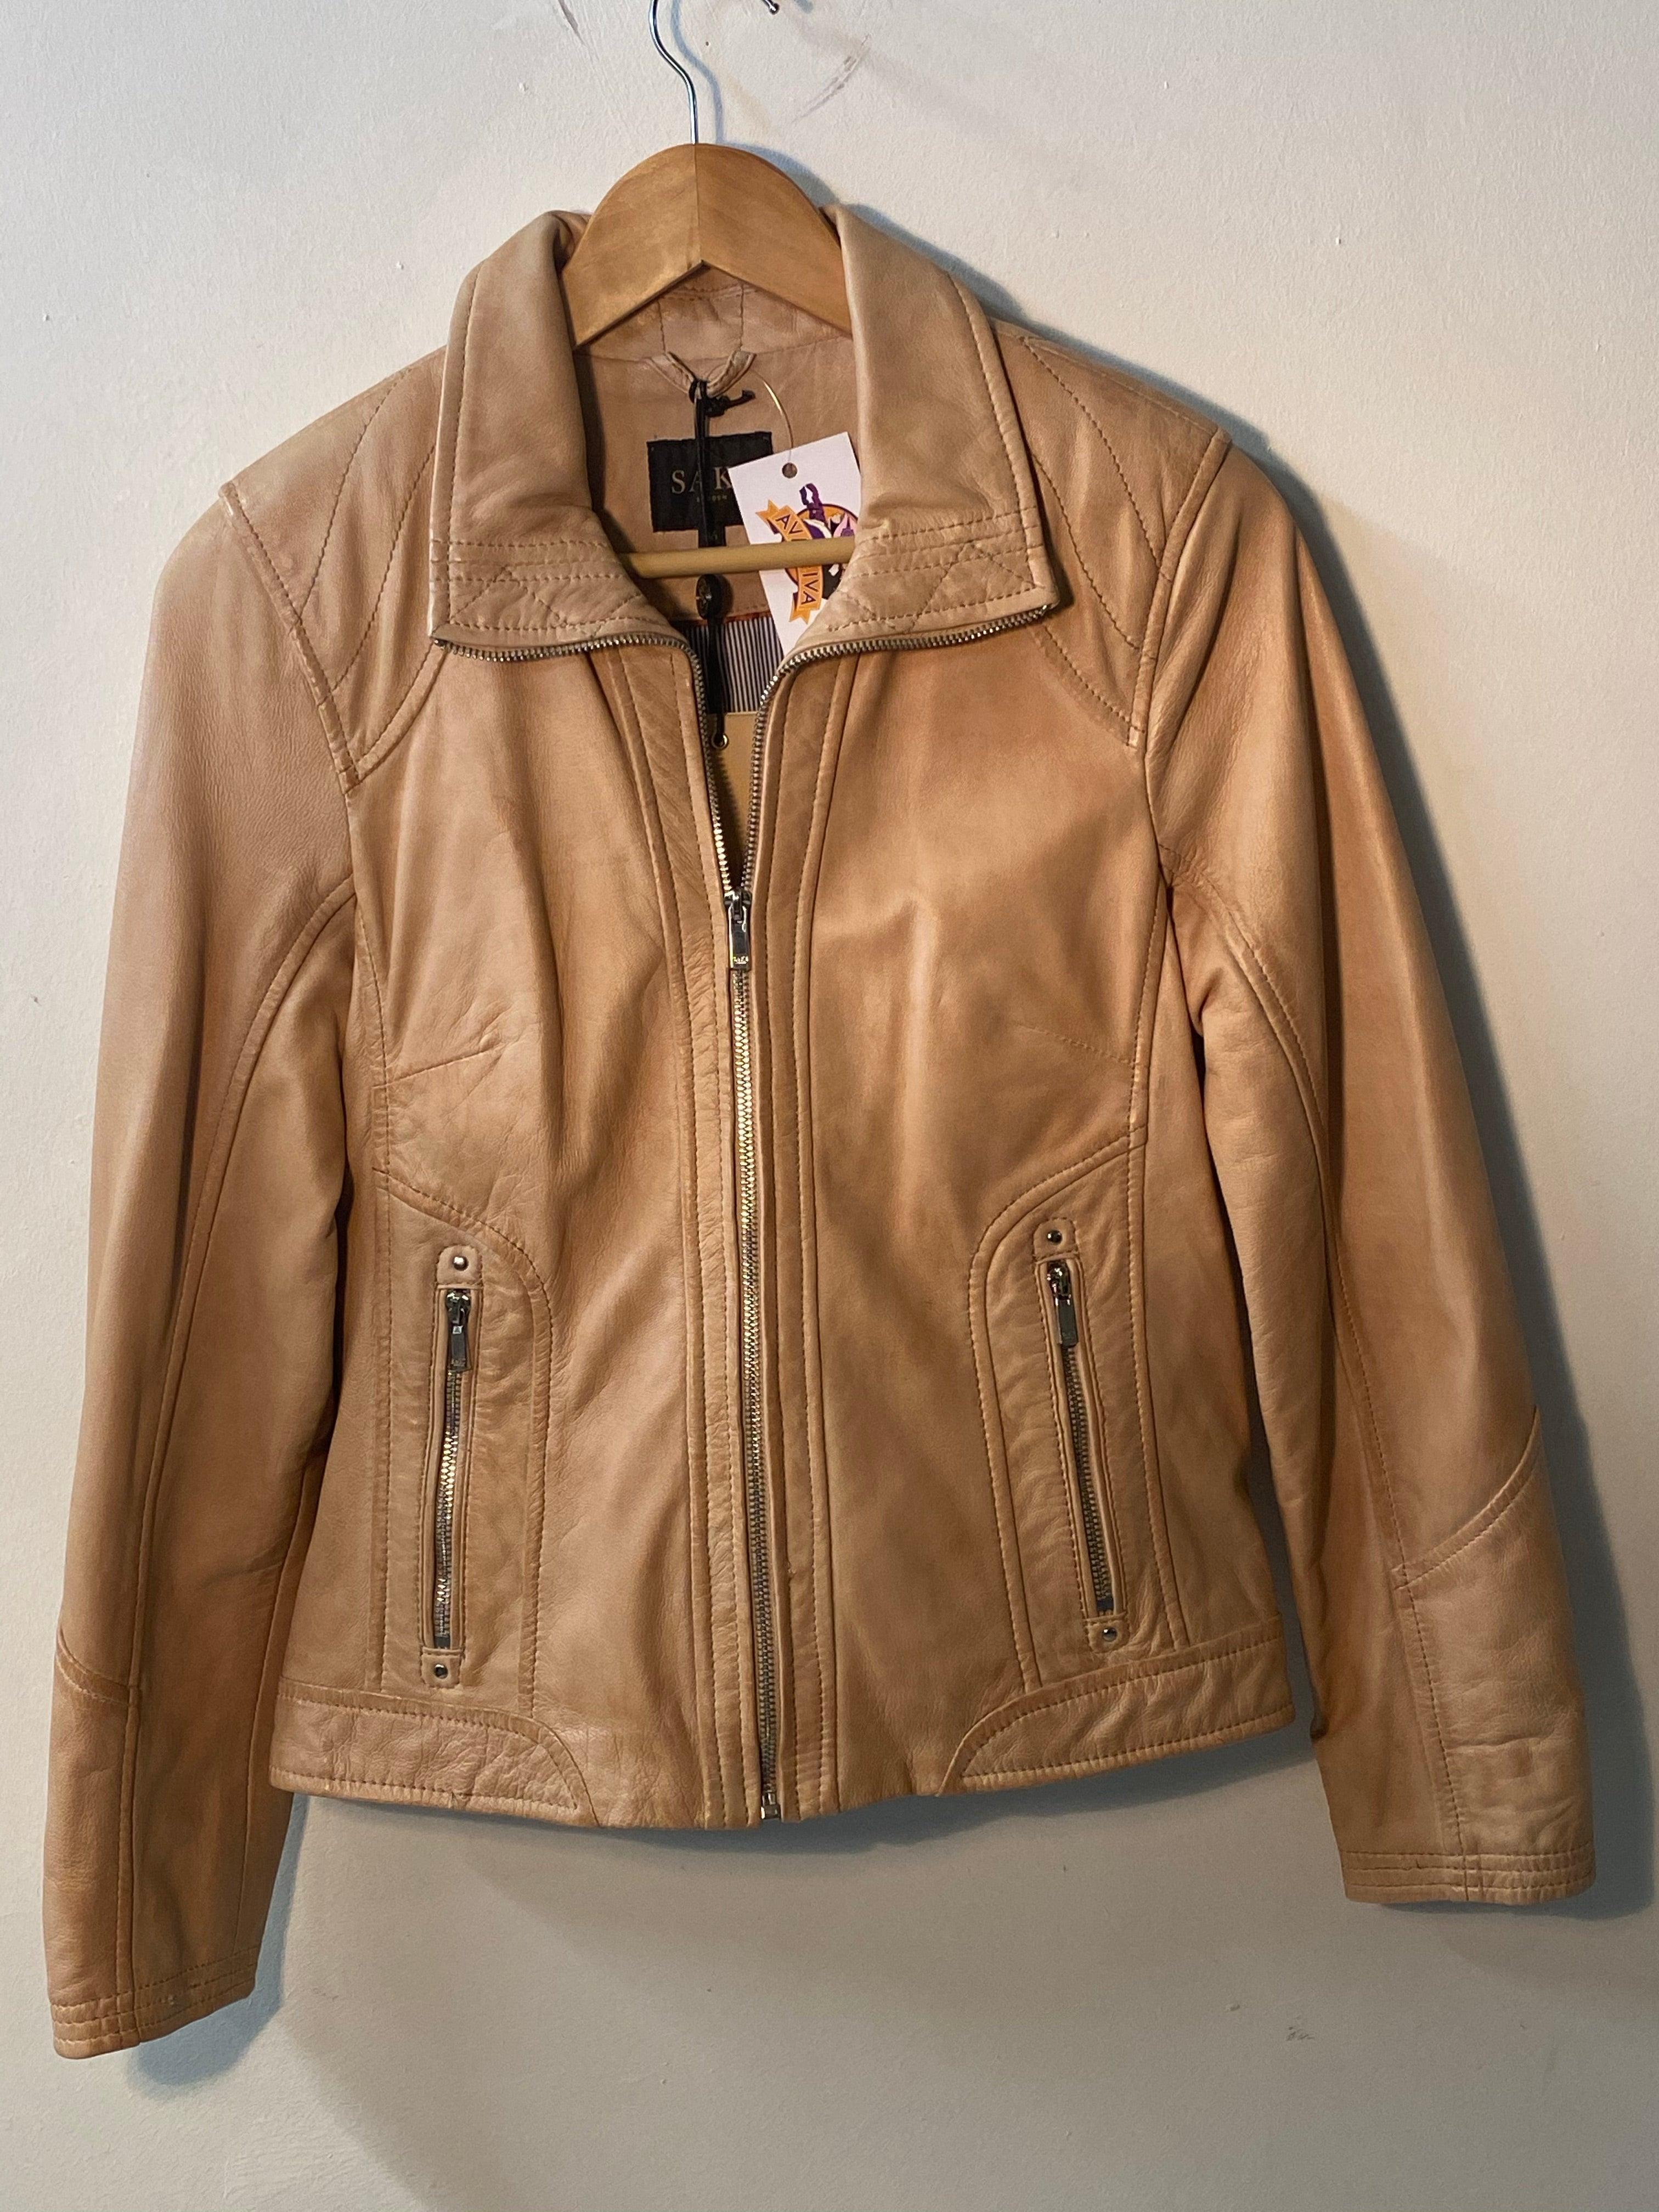 Saki Sweden "Gella" Biker Jacket Beige Leather Size 36 (UK10) BNWT Ava & Iva